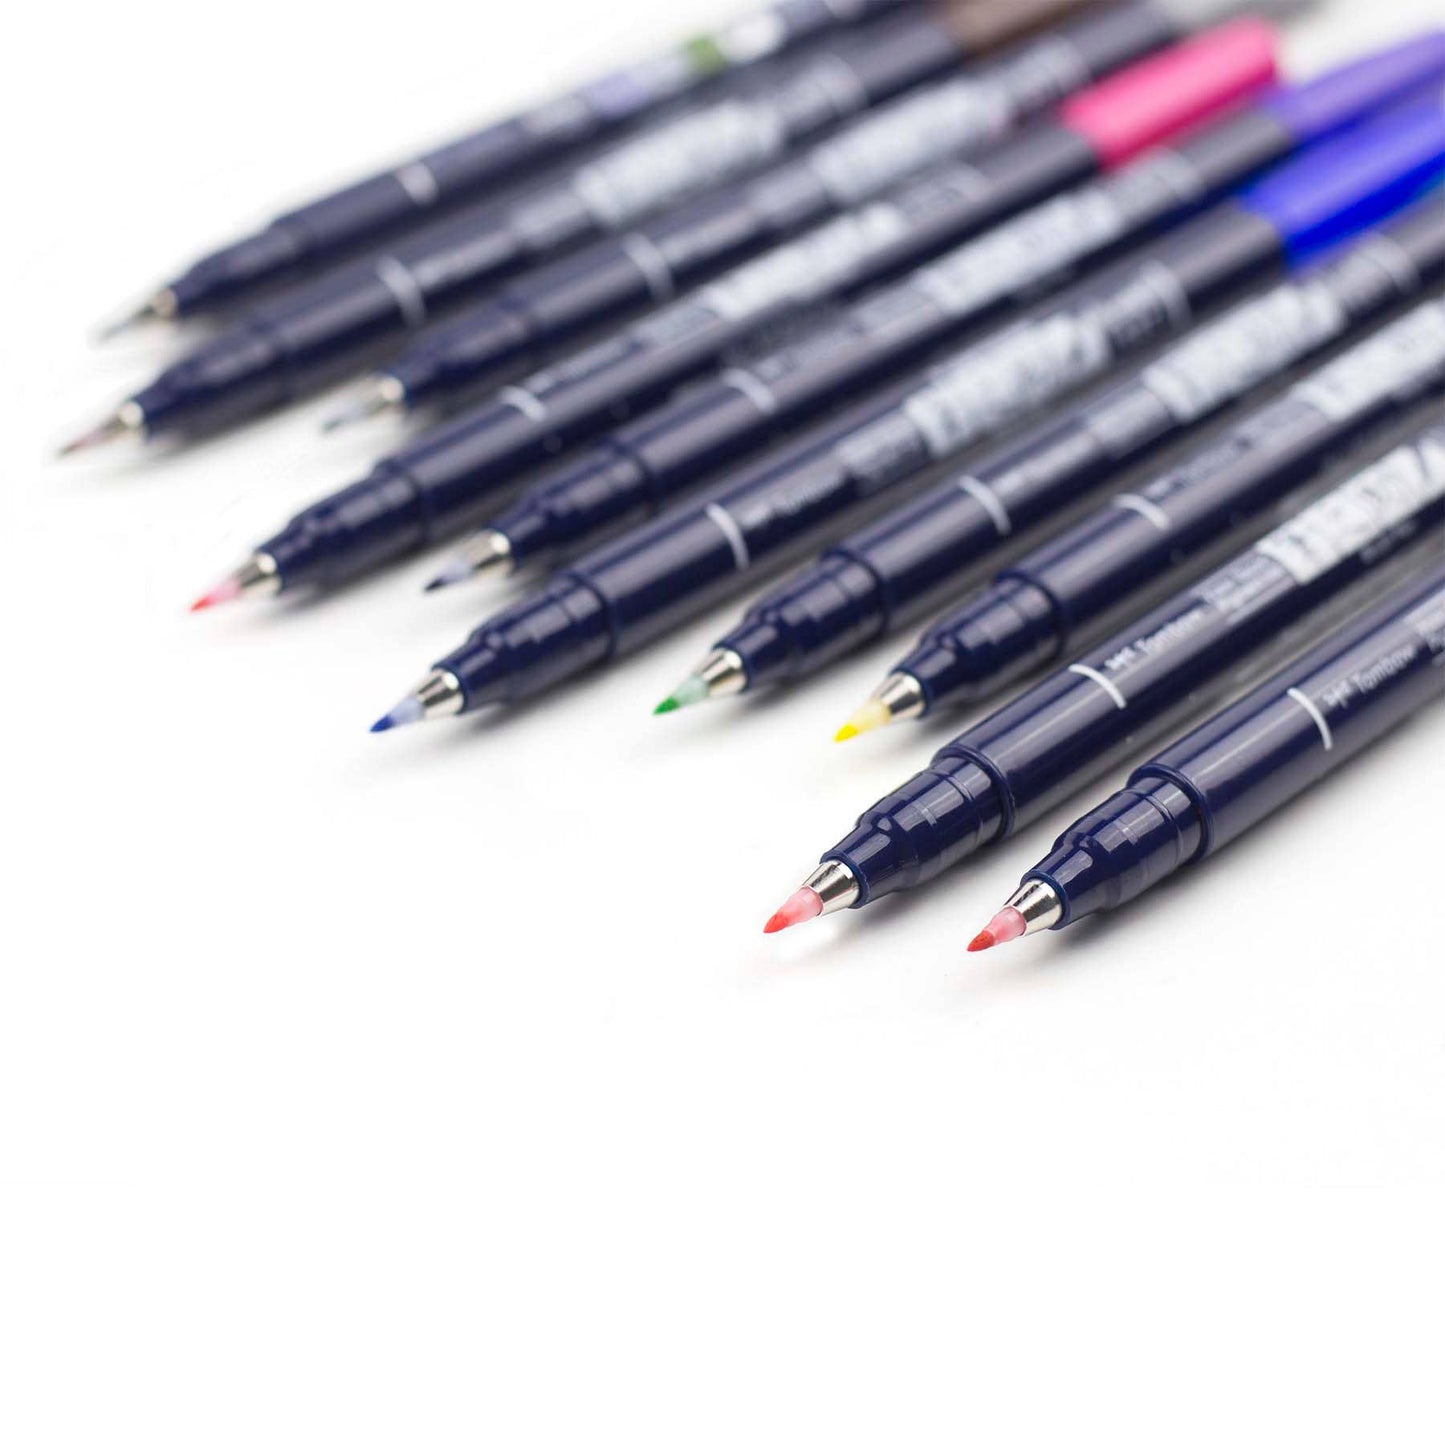 Tombow Fudenosuke Colors Calligraphy Brush Pens (10 Colors)